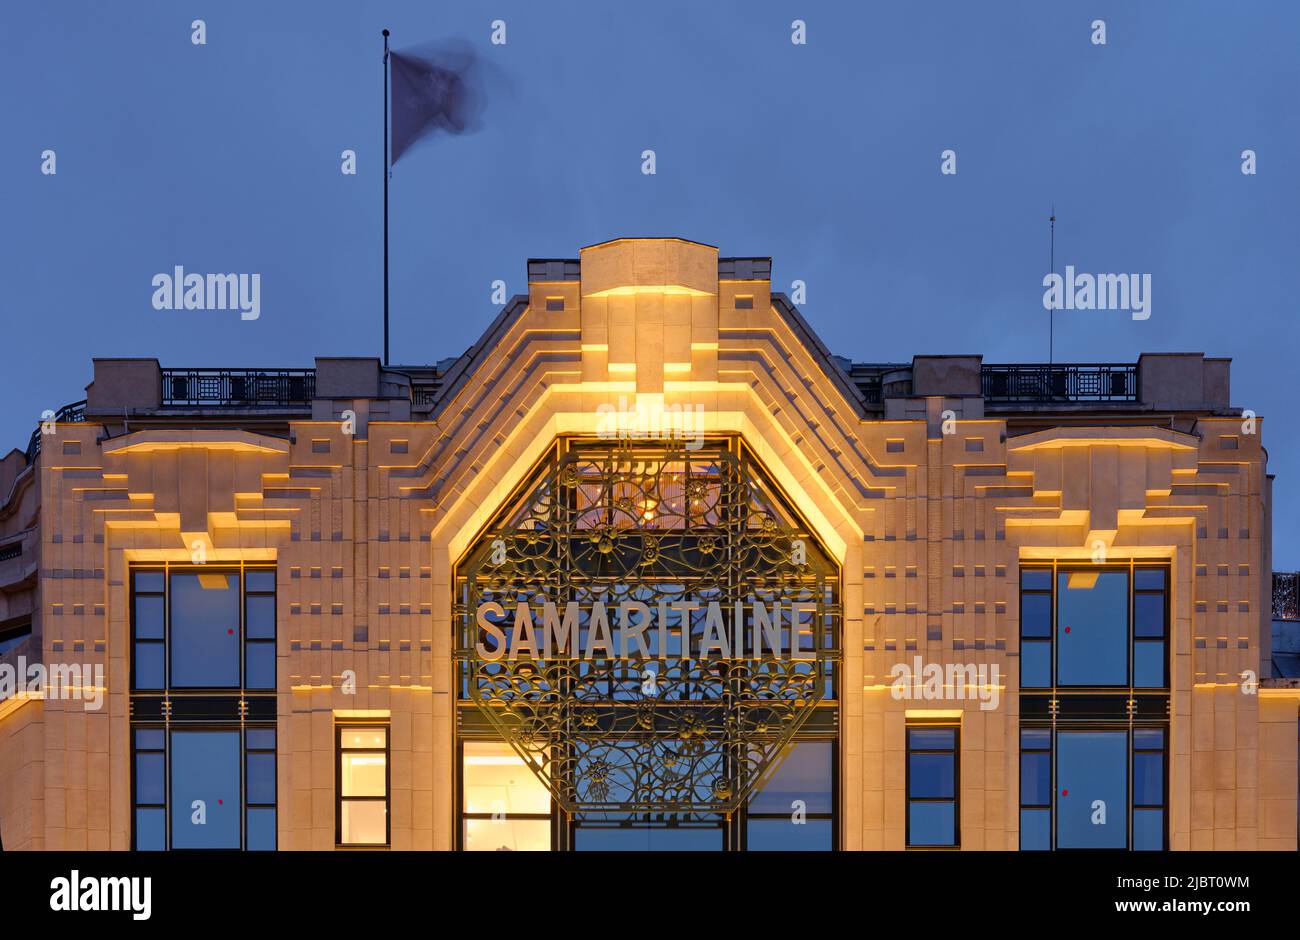 France, Paris, La Samaritaine department store Stock Photo